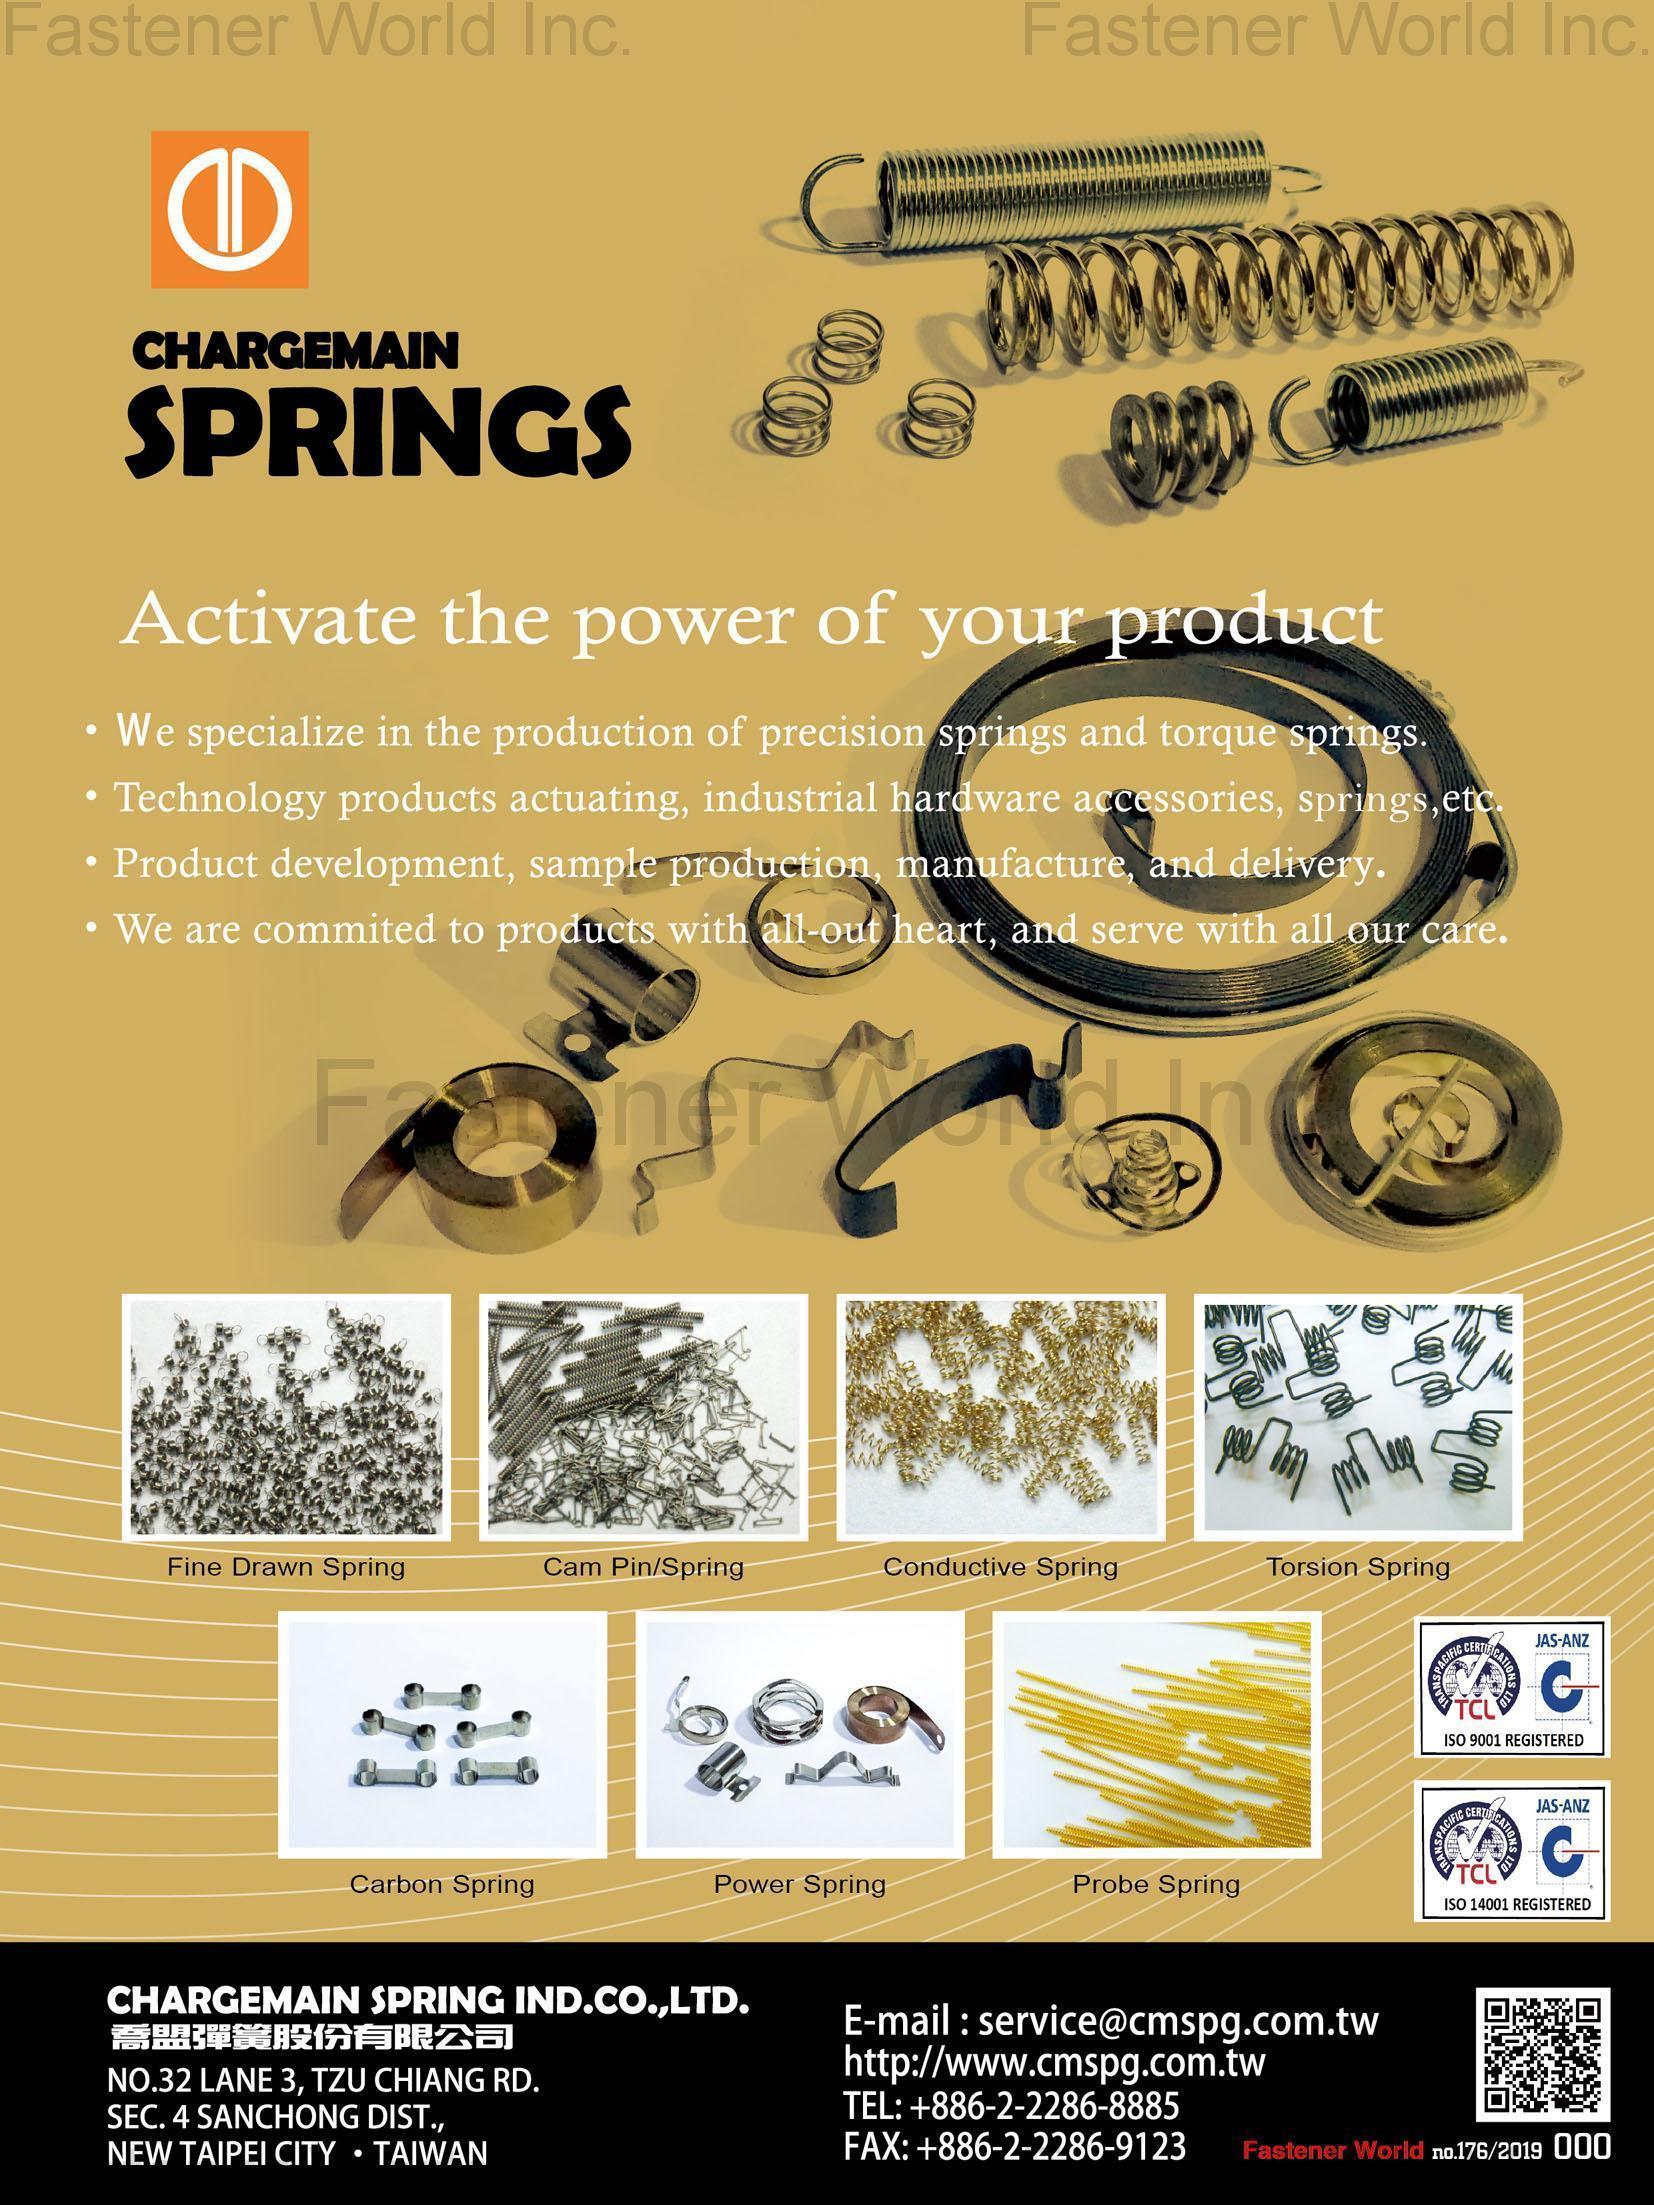 CHARGEMAIN SPRING IND CO., LTD. , Springs, Torque Springs, Fine Drawn Spring, Cam Pin/Spring, Conductive Spring, Torsion Spring, Carbon Spring, Power Spring, Probe Spring , Springs